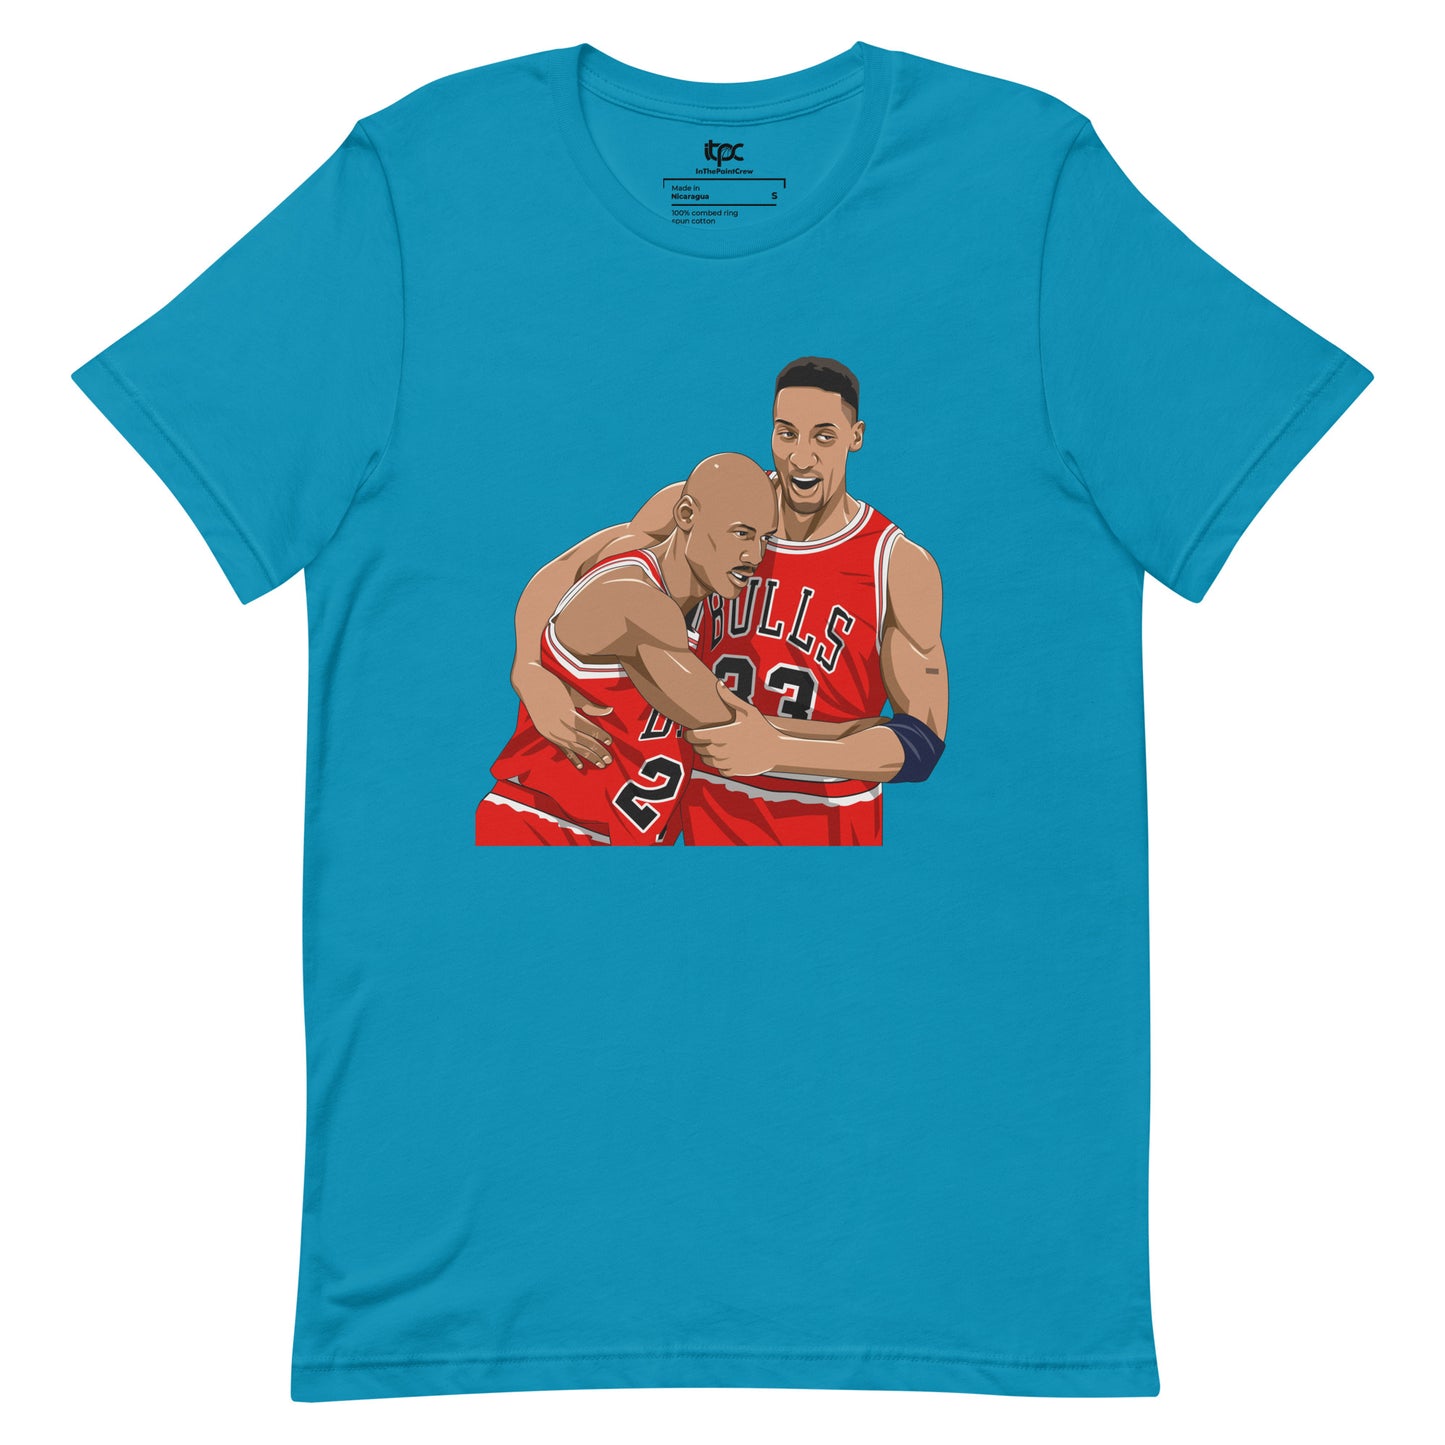 Michael Jordan and Scottie Pippen - "Flu Game" t-shirt